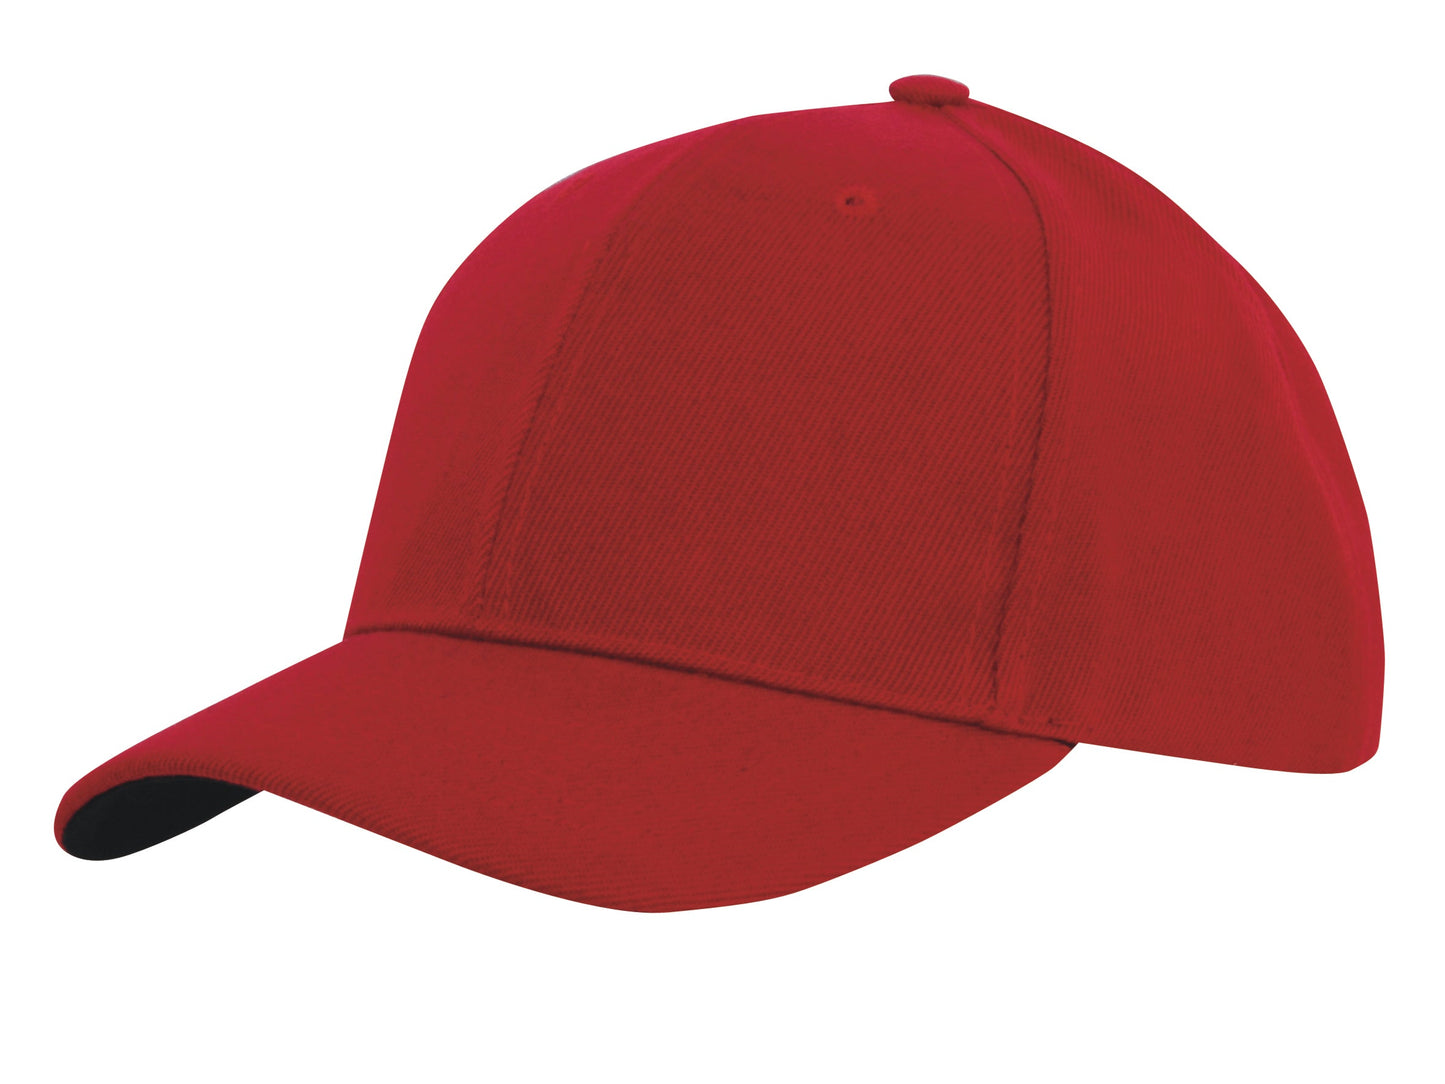 Headwear Prem American Twill Contrast  X12 - 3920 Cap Headwear Professionals Red/Black One Size 